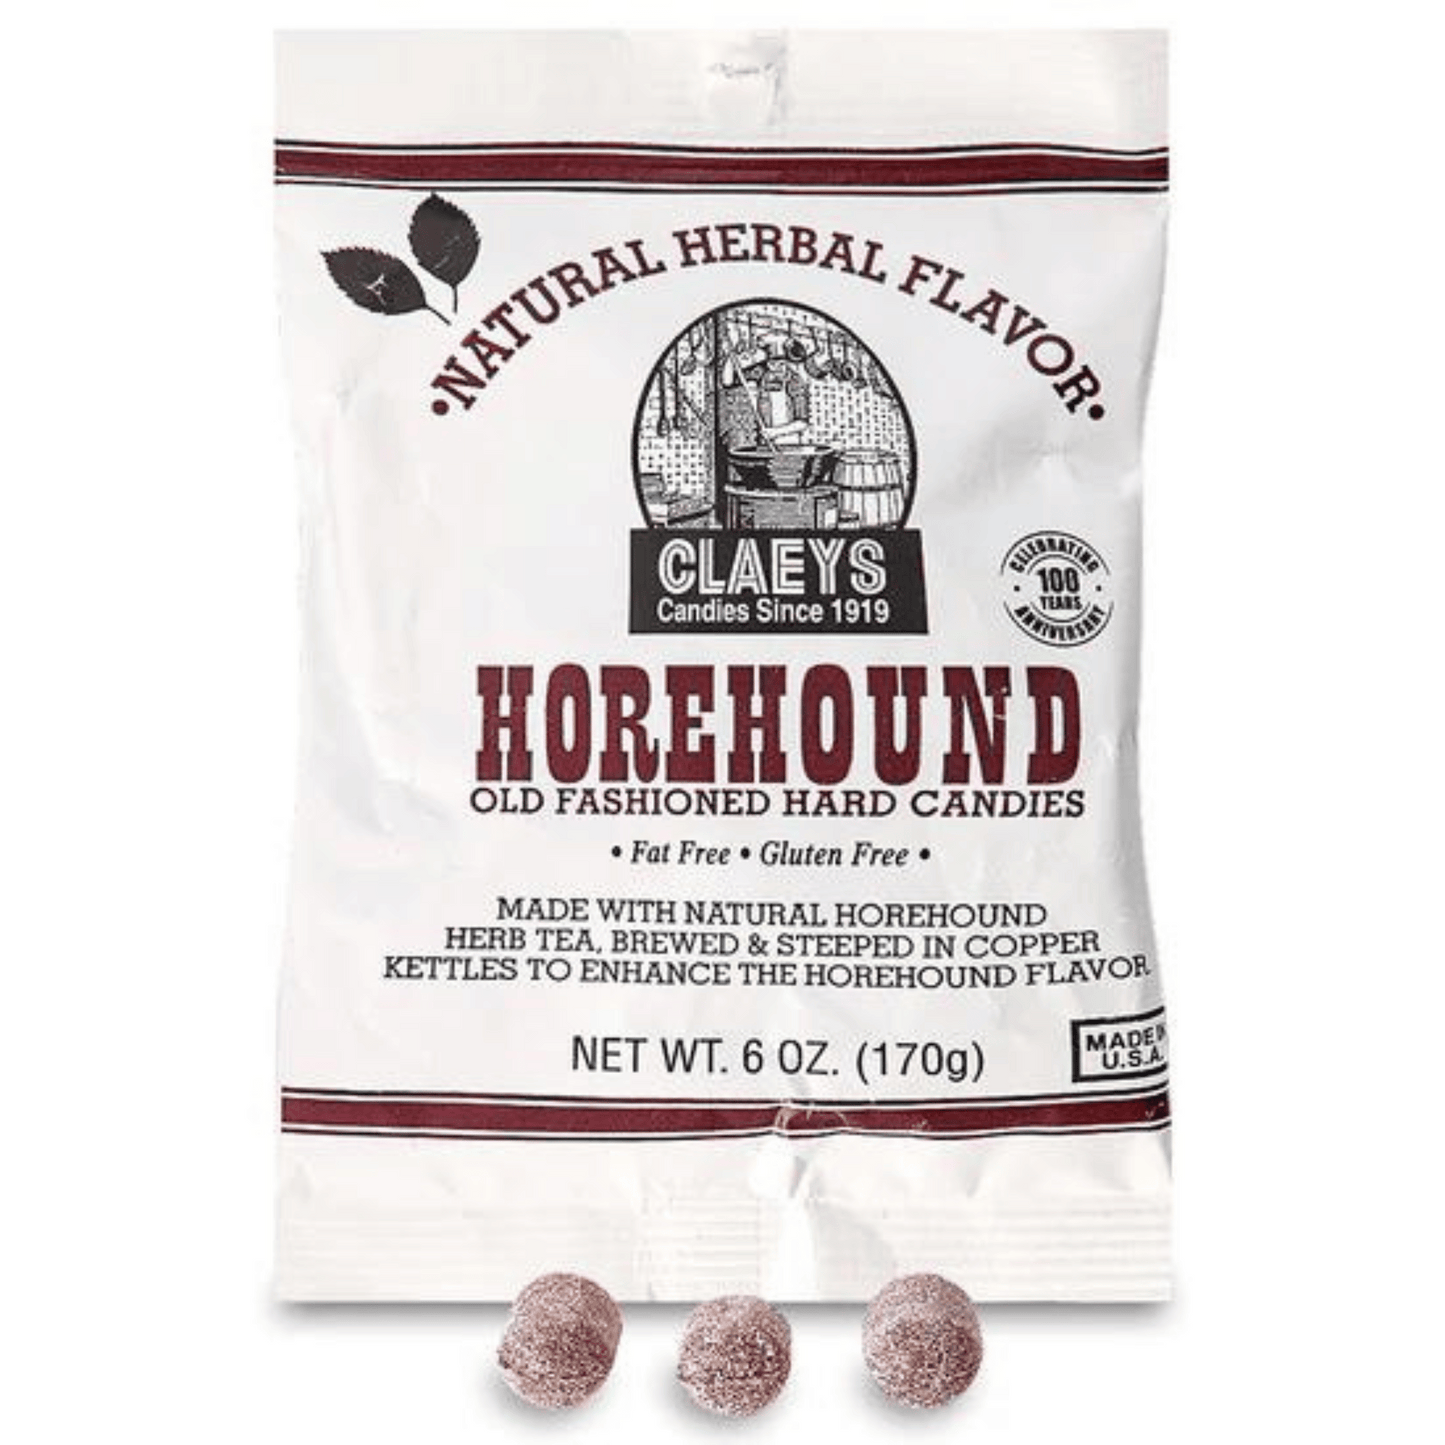 Primary Image of Horehound Candies